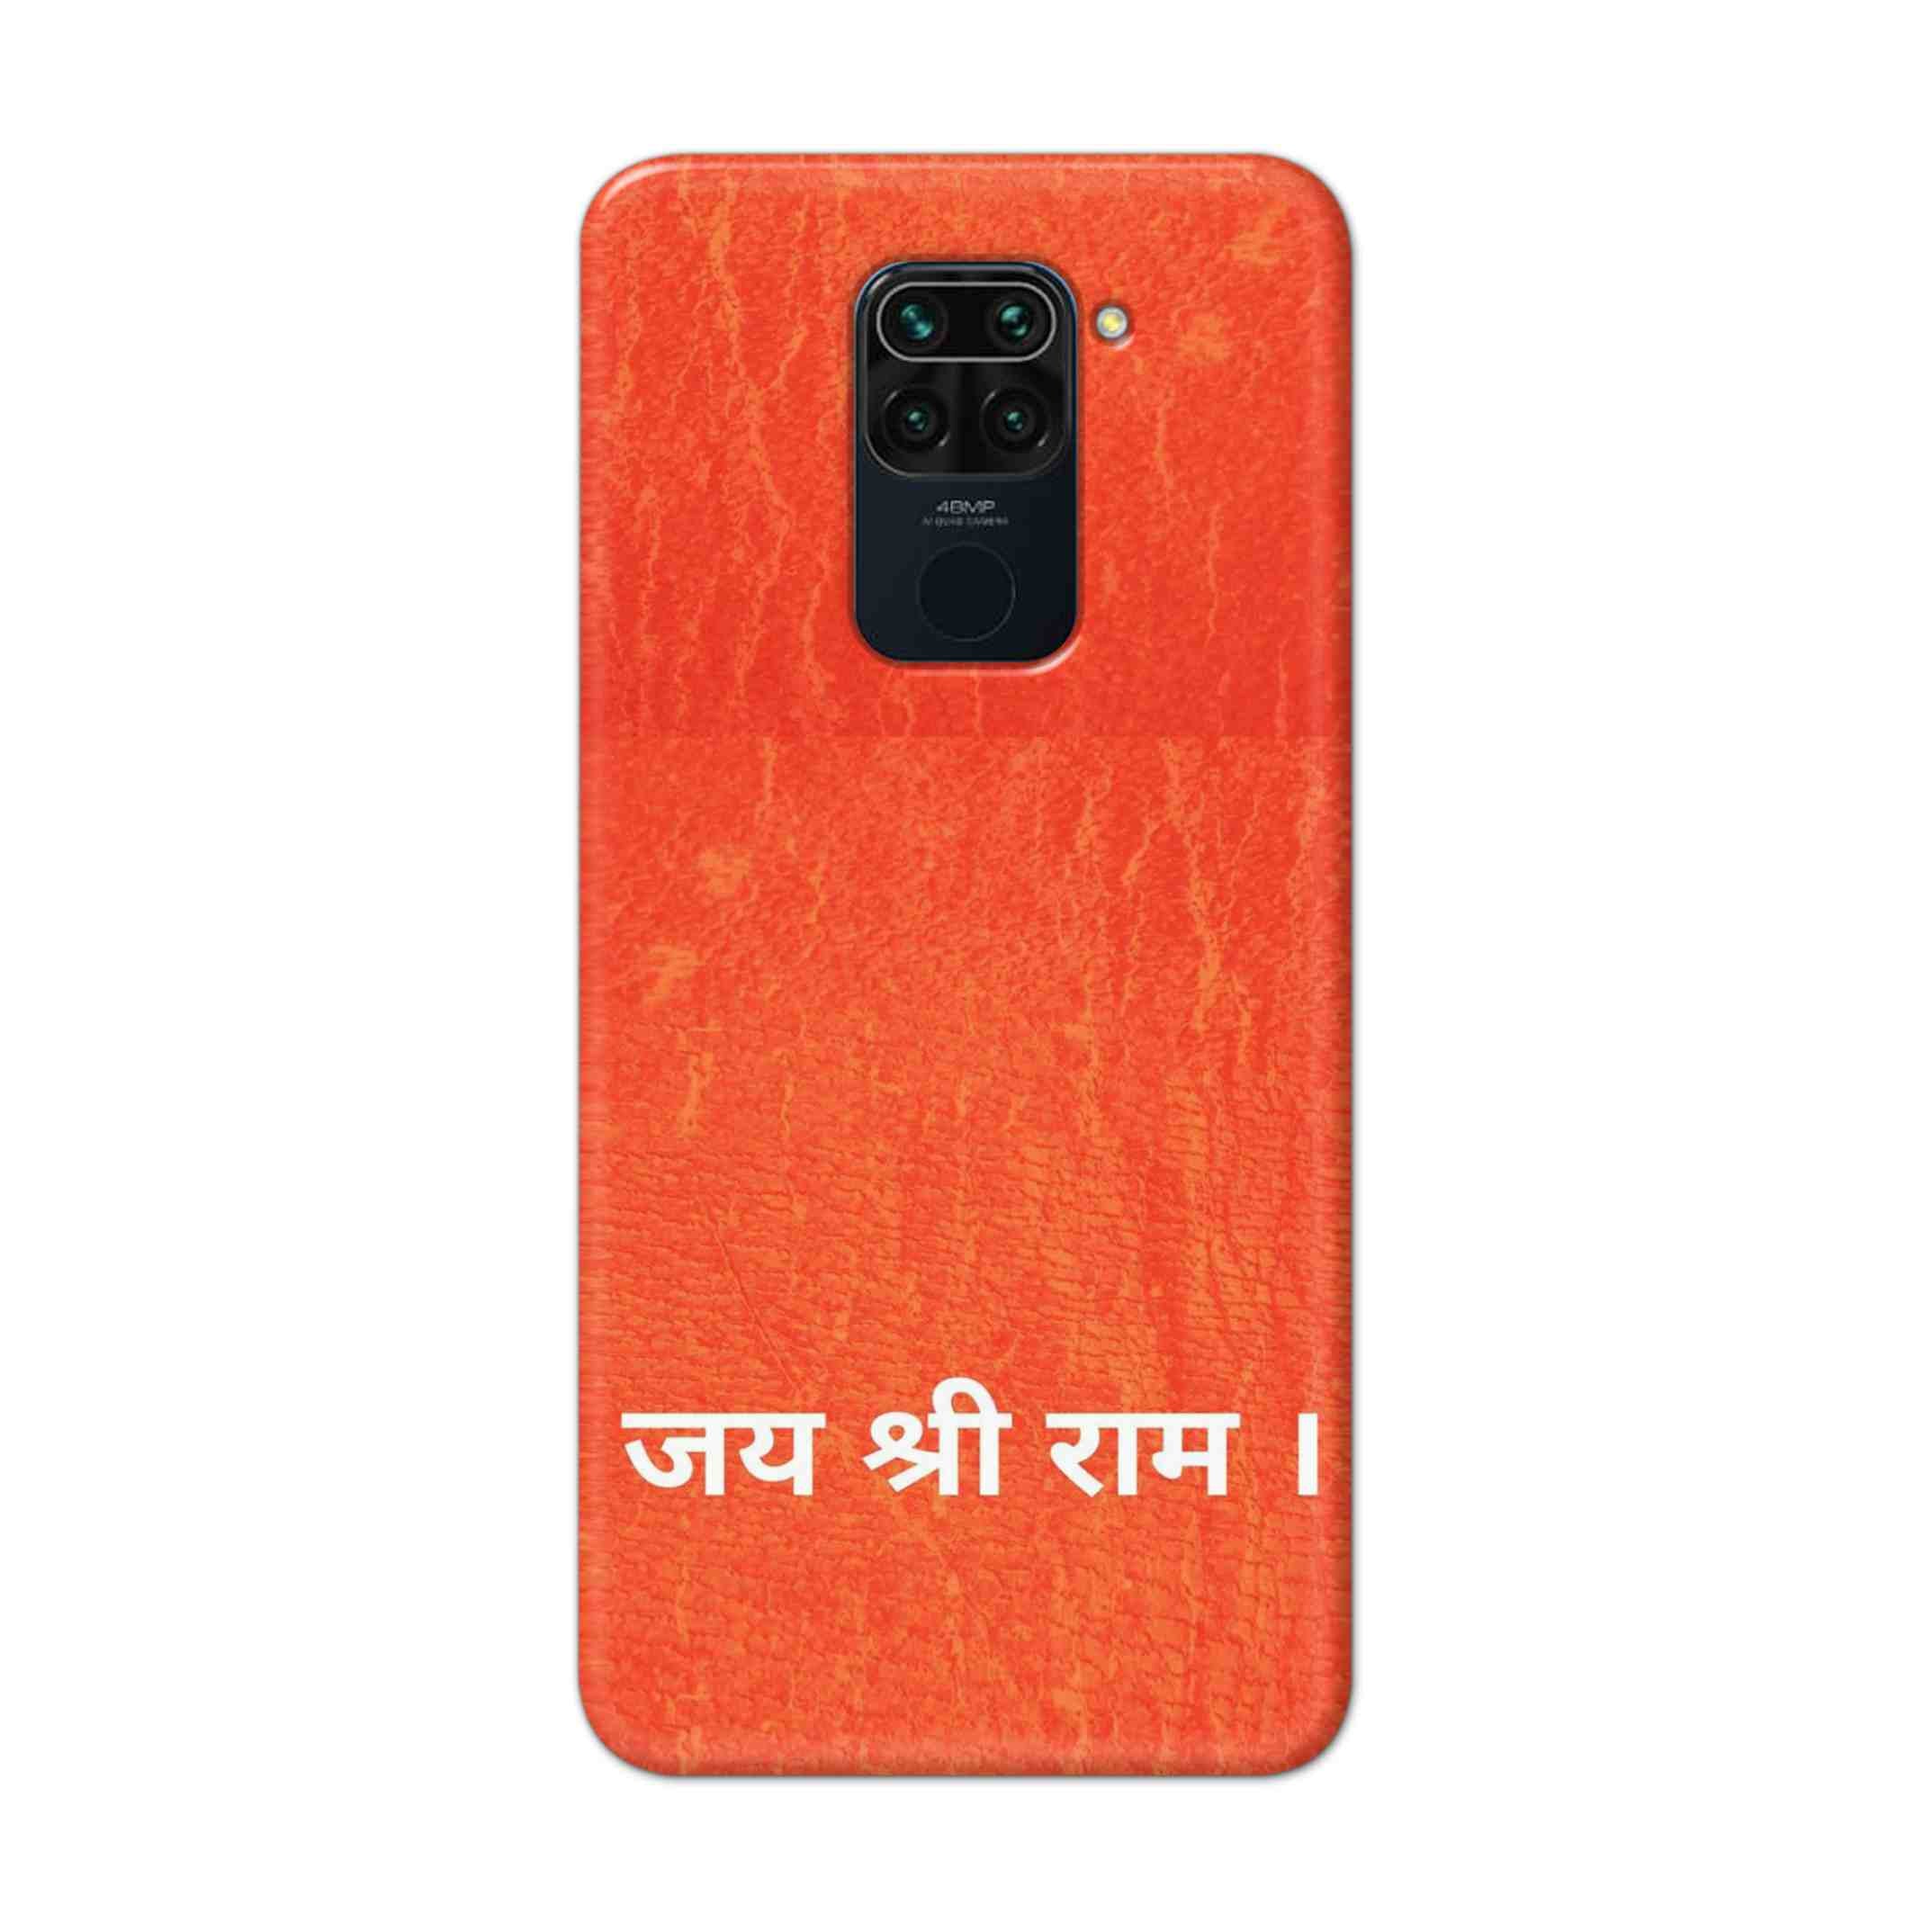 Buy Jai Shree Ram Hard Back Mobile Phone Case Cover For Xiaomi Redmi Note 9 Online